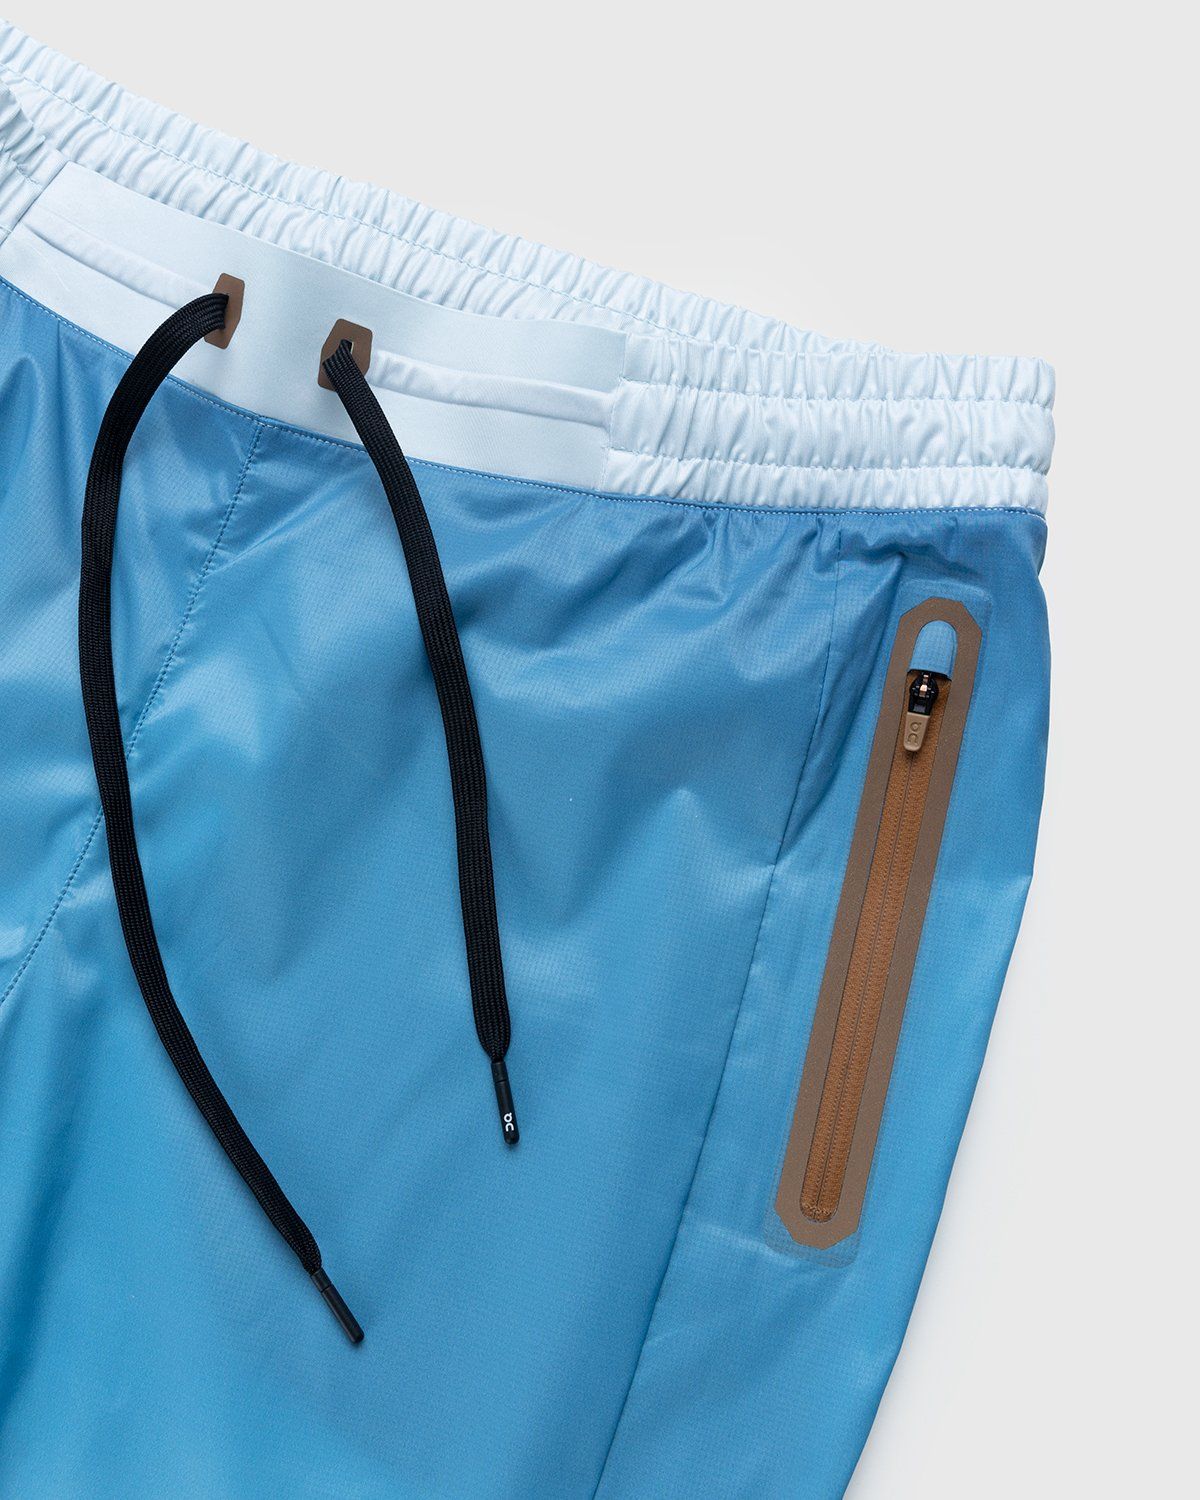 Loewe x On – Men's Technical Running Pants Gradient Grey - Active Pants - Blue - Image 5